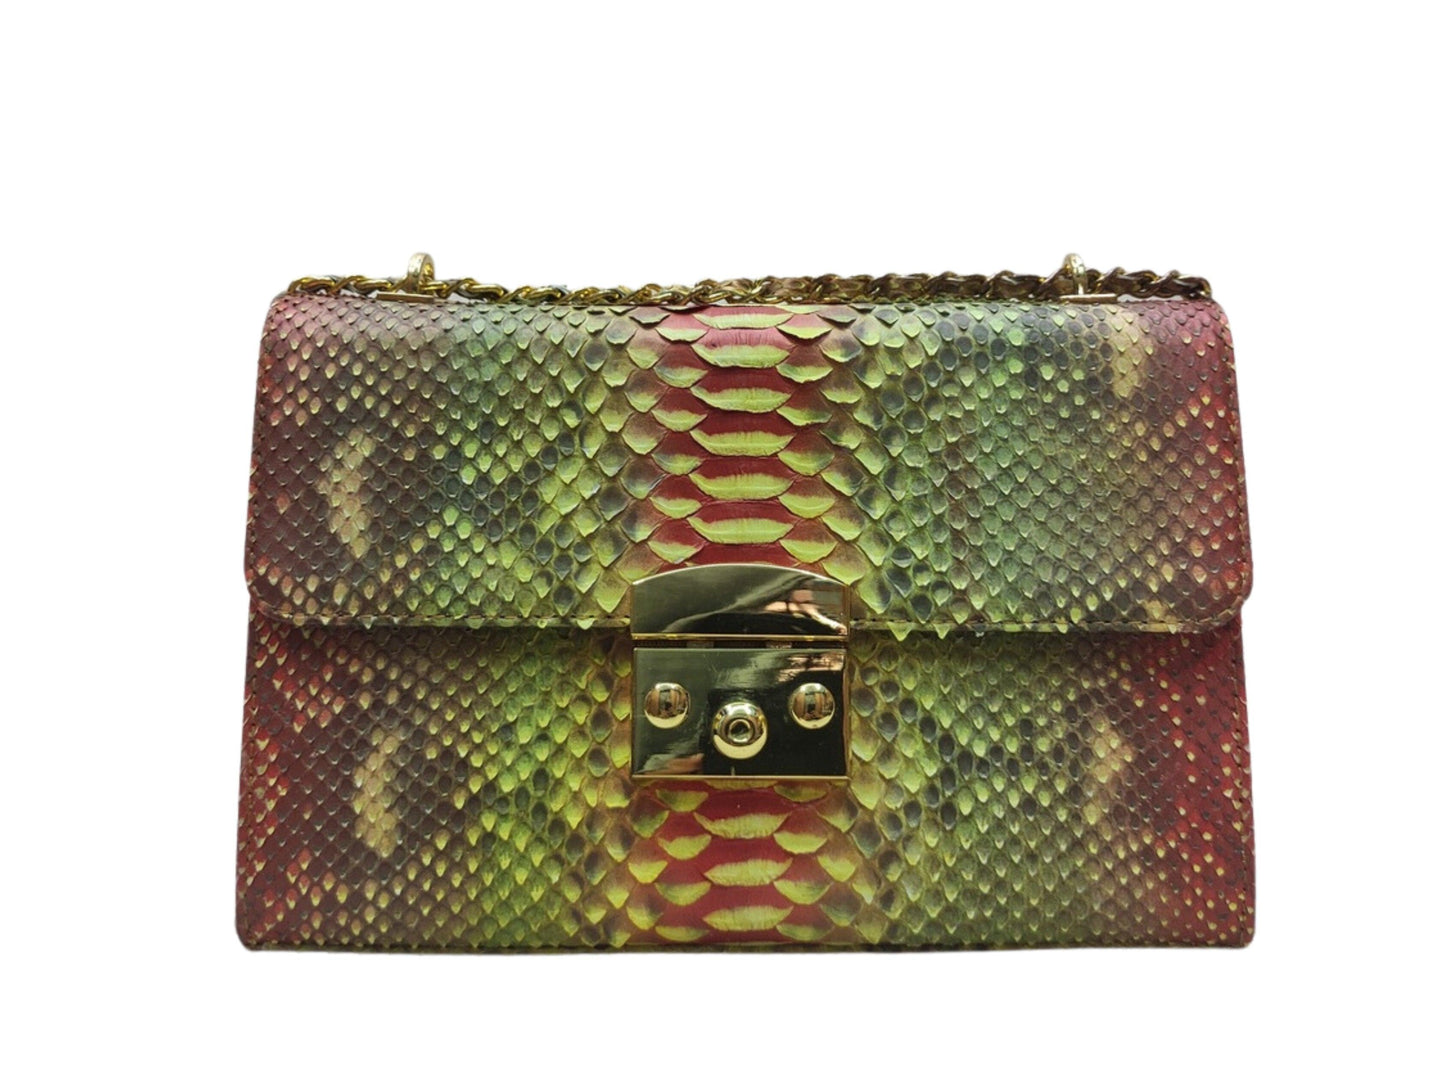 Python Bags Snakeskin Python Small Handbag Green Python Jacket by LFM Fashion